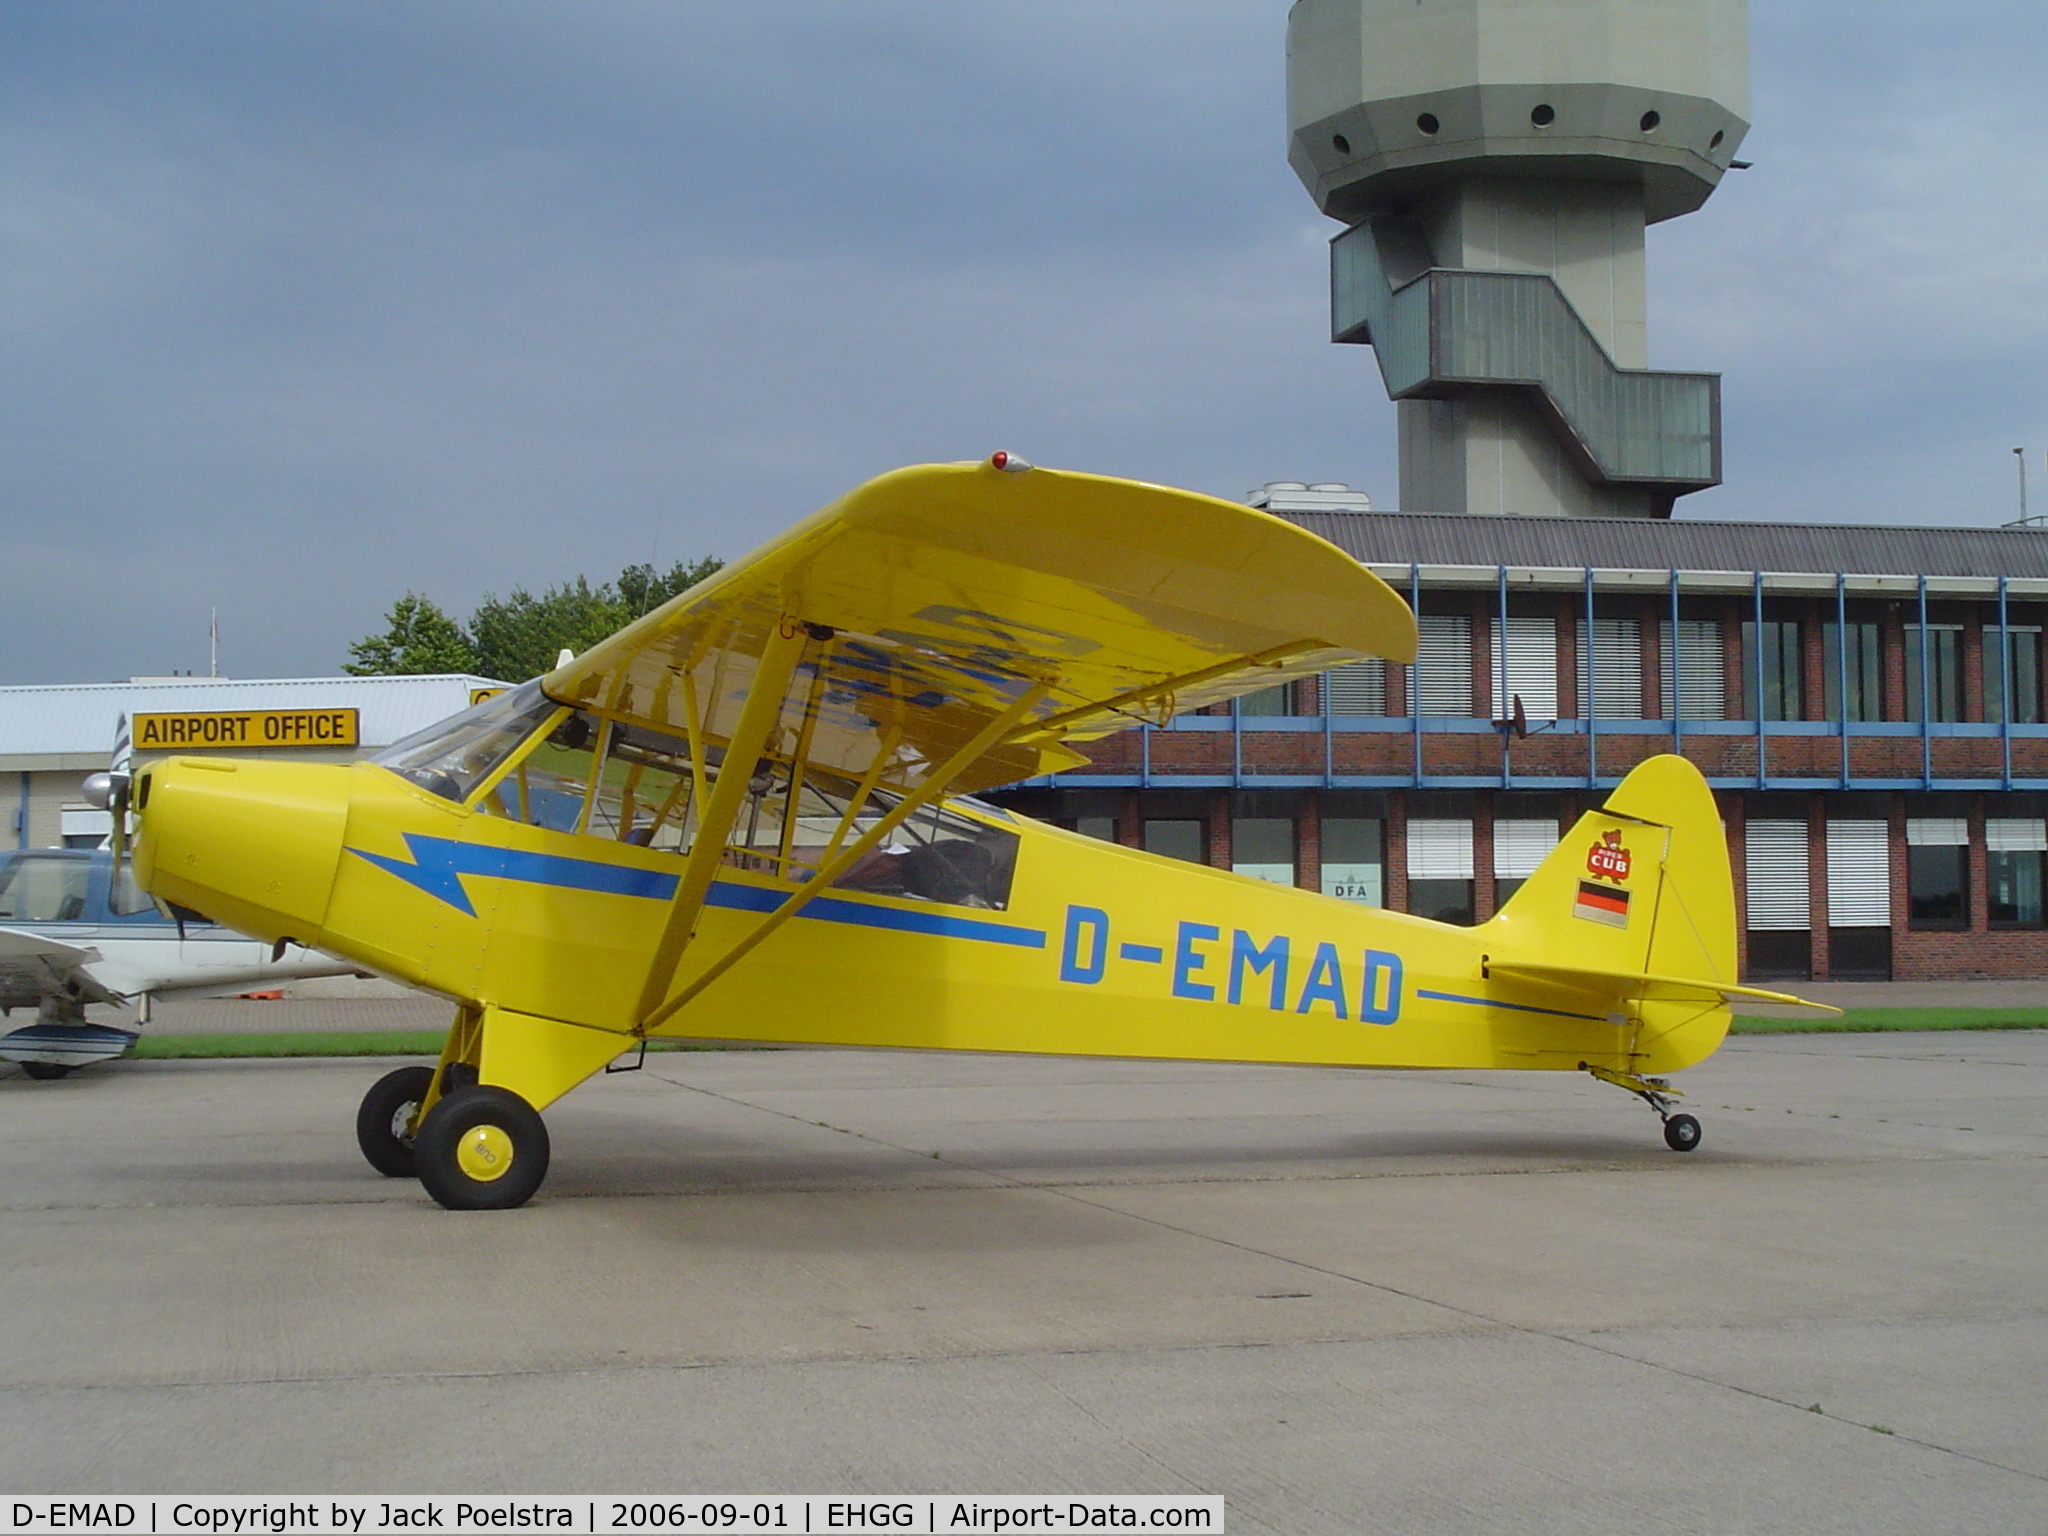 D-EMAD, Piper PA-18-95 Super Cub Super Cub C/N 18-2030, D-EMAD at ramp of Groningen airport